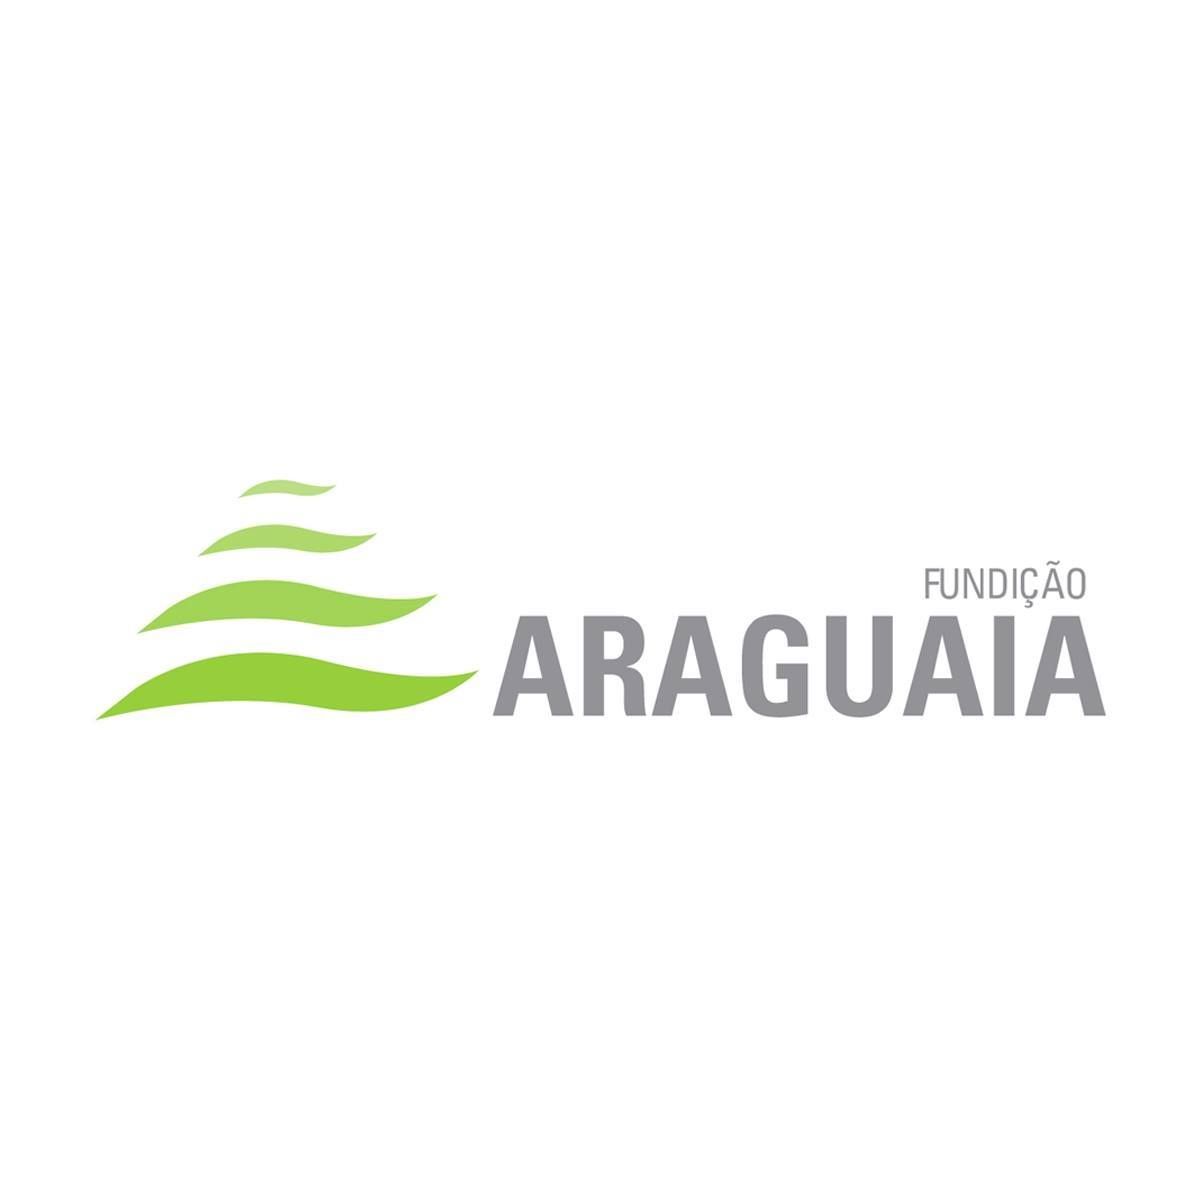 Fundição Araguaia Ltda